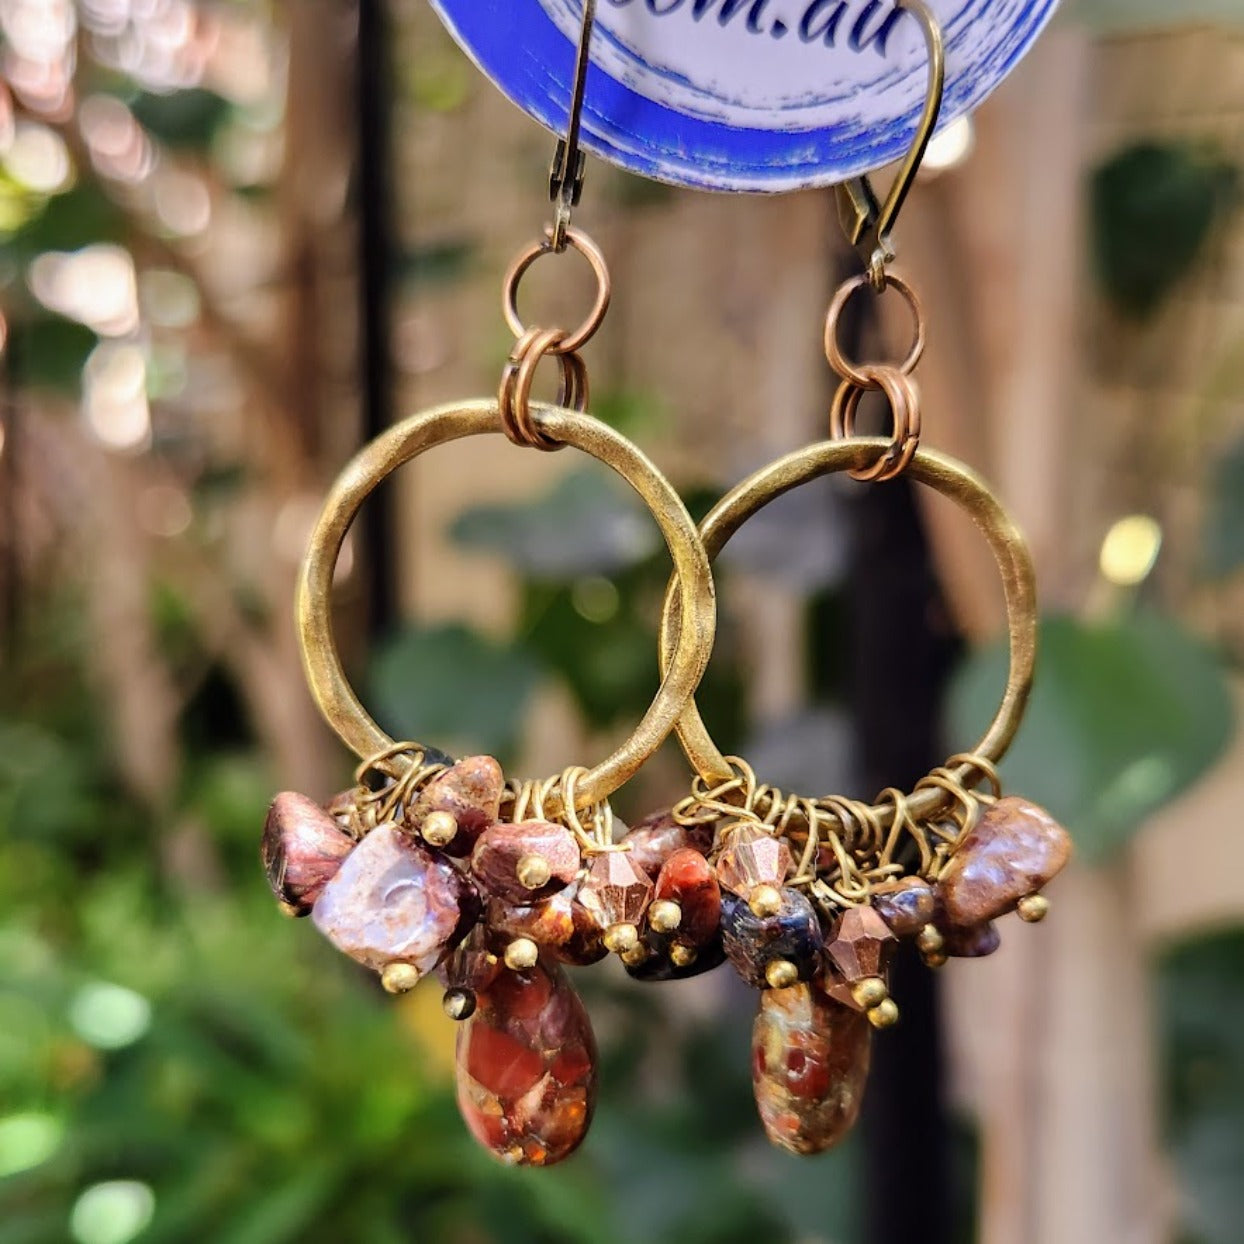 NATIVE TURQUOISE - GOLDEN COPPER & BRASS AGATE BRASS EARRINGS - Premium earrings from www.beachboho.com.au - Just $90! Shop now at www.beachboho.com.au